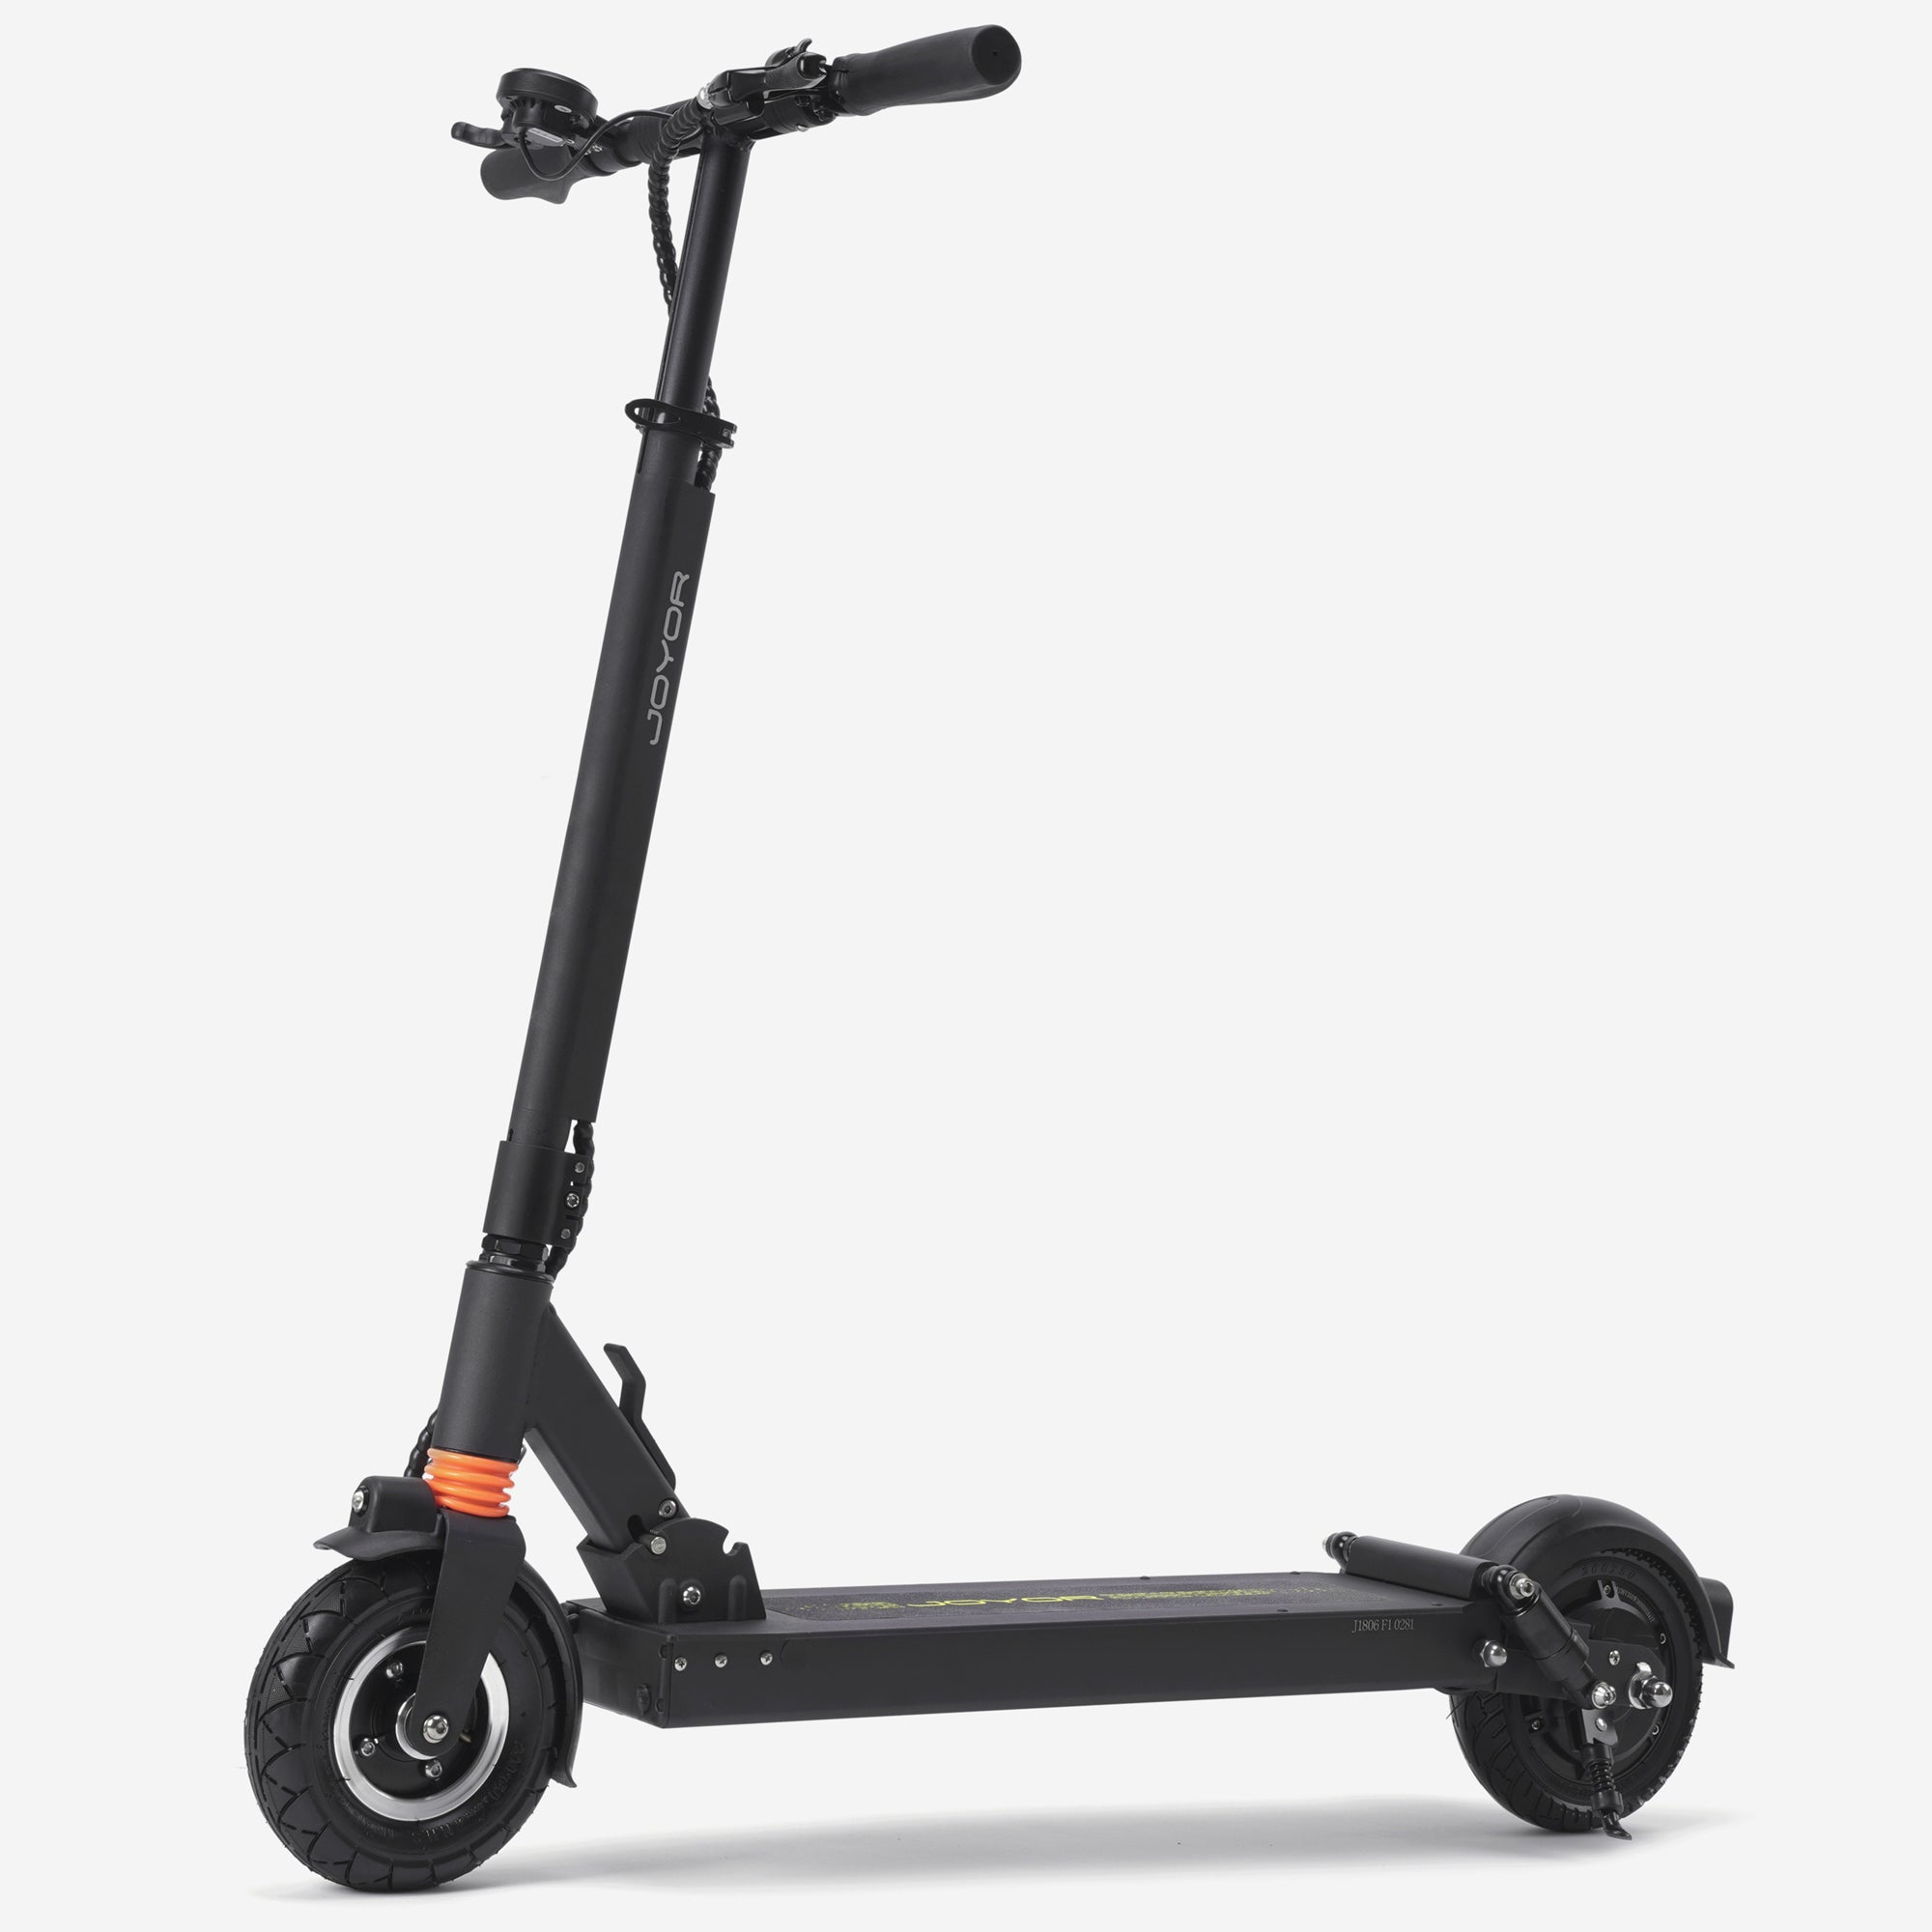 Joyor USA® - Research and Buy Genuine Joyor Electric Scooters